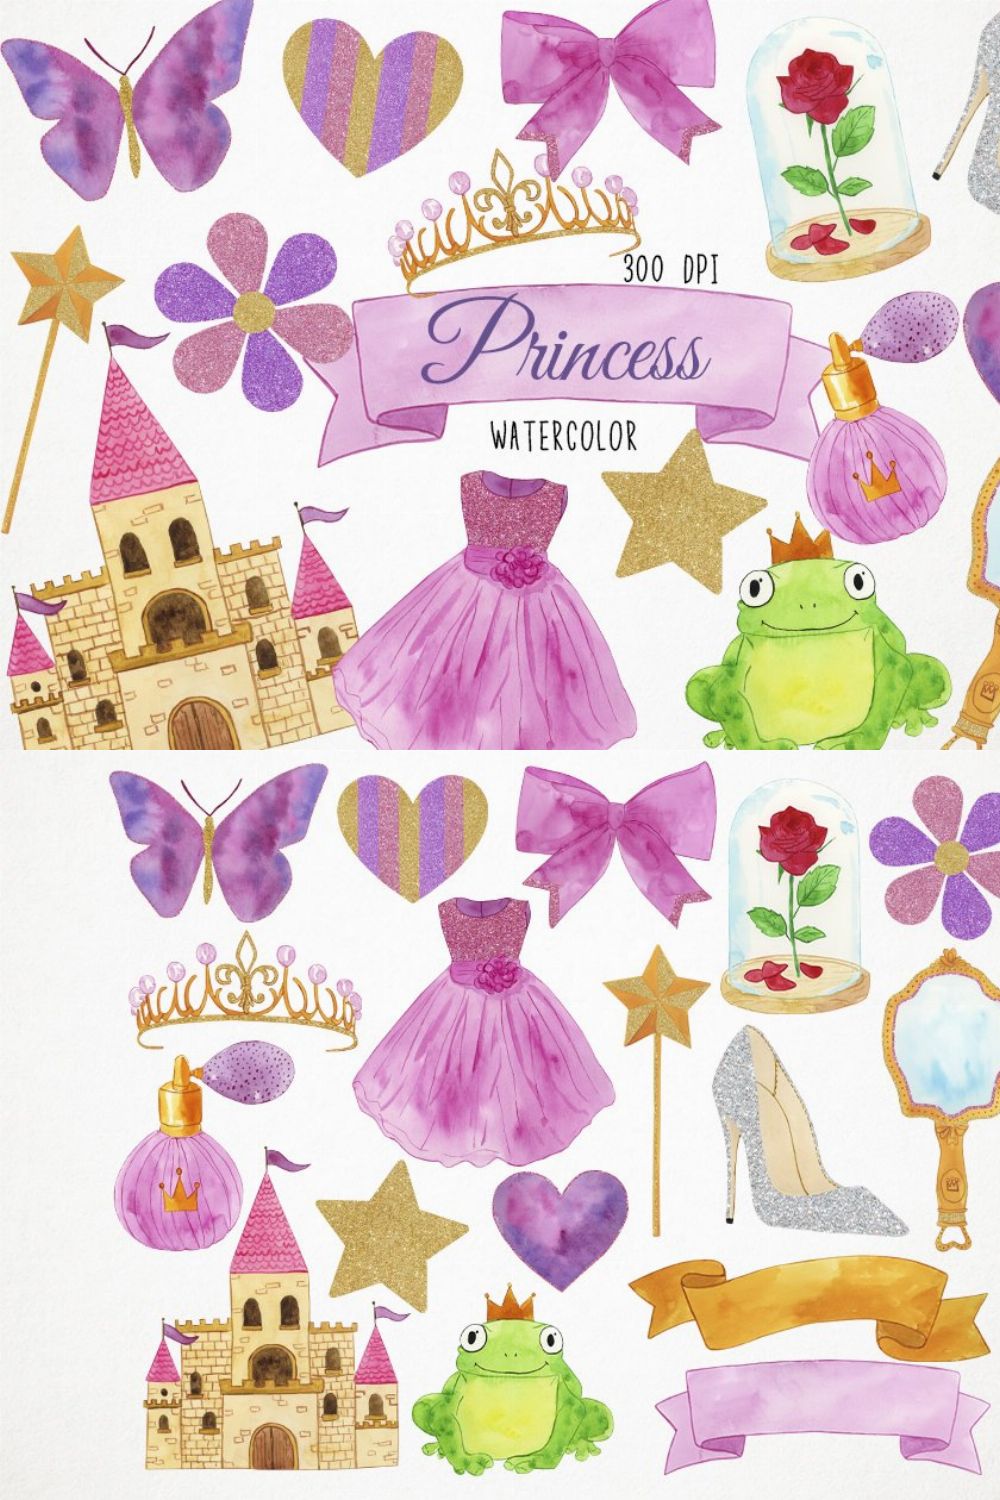 Watercolor Princess Clipart pinterest preview image.